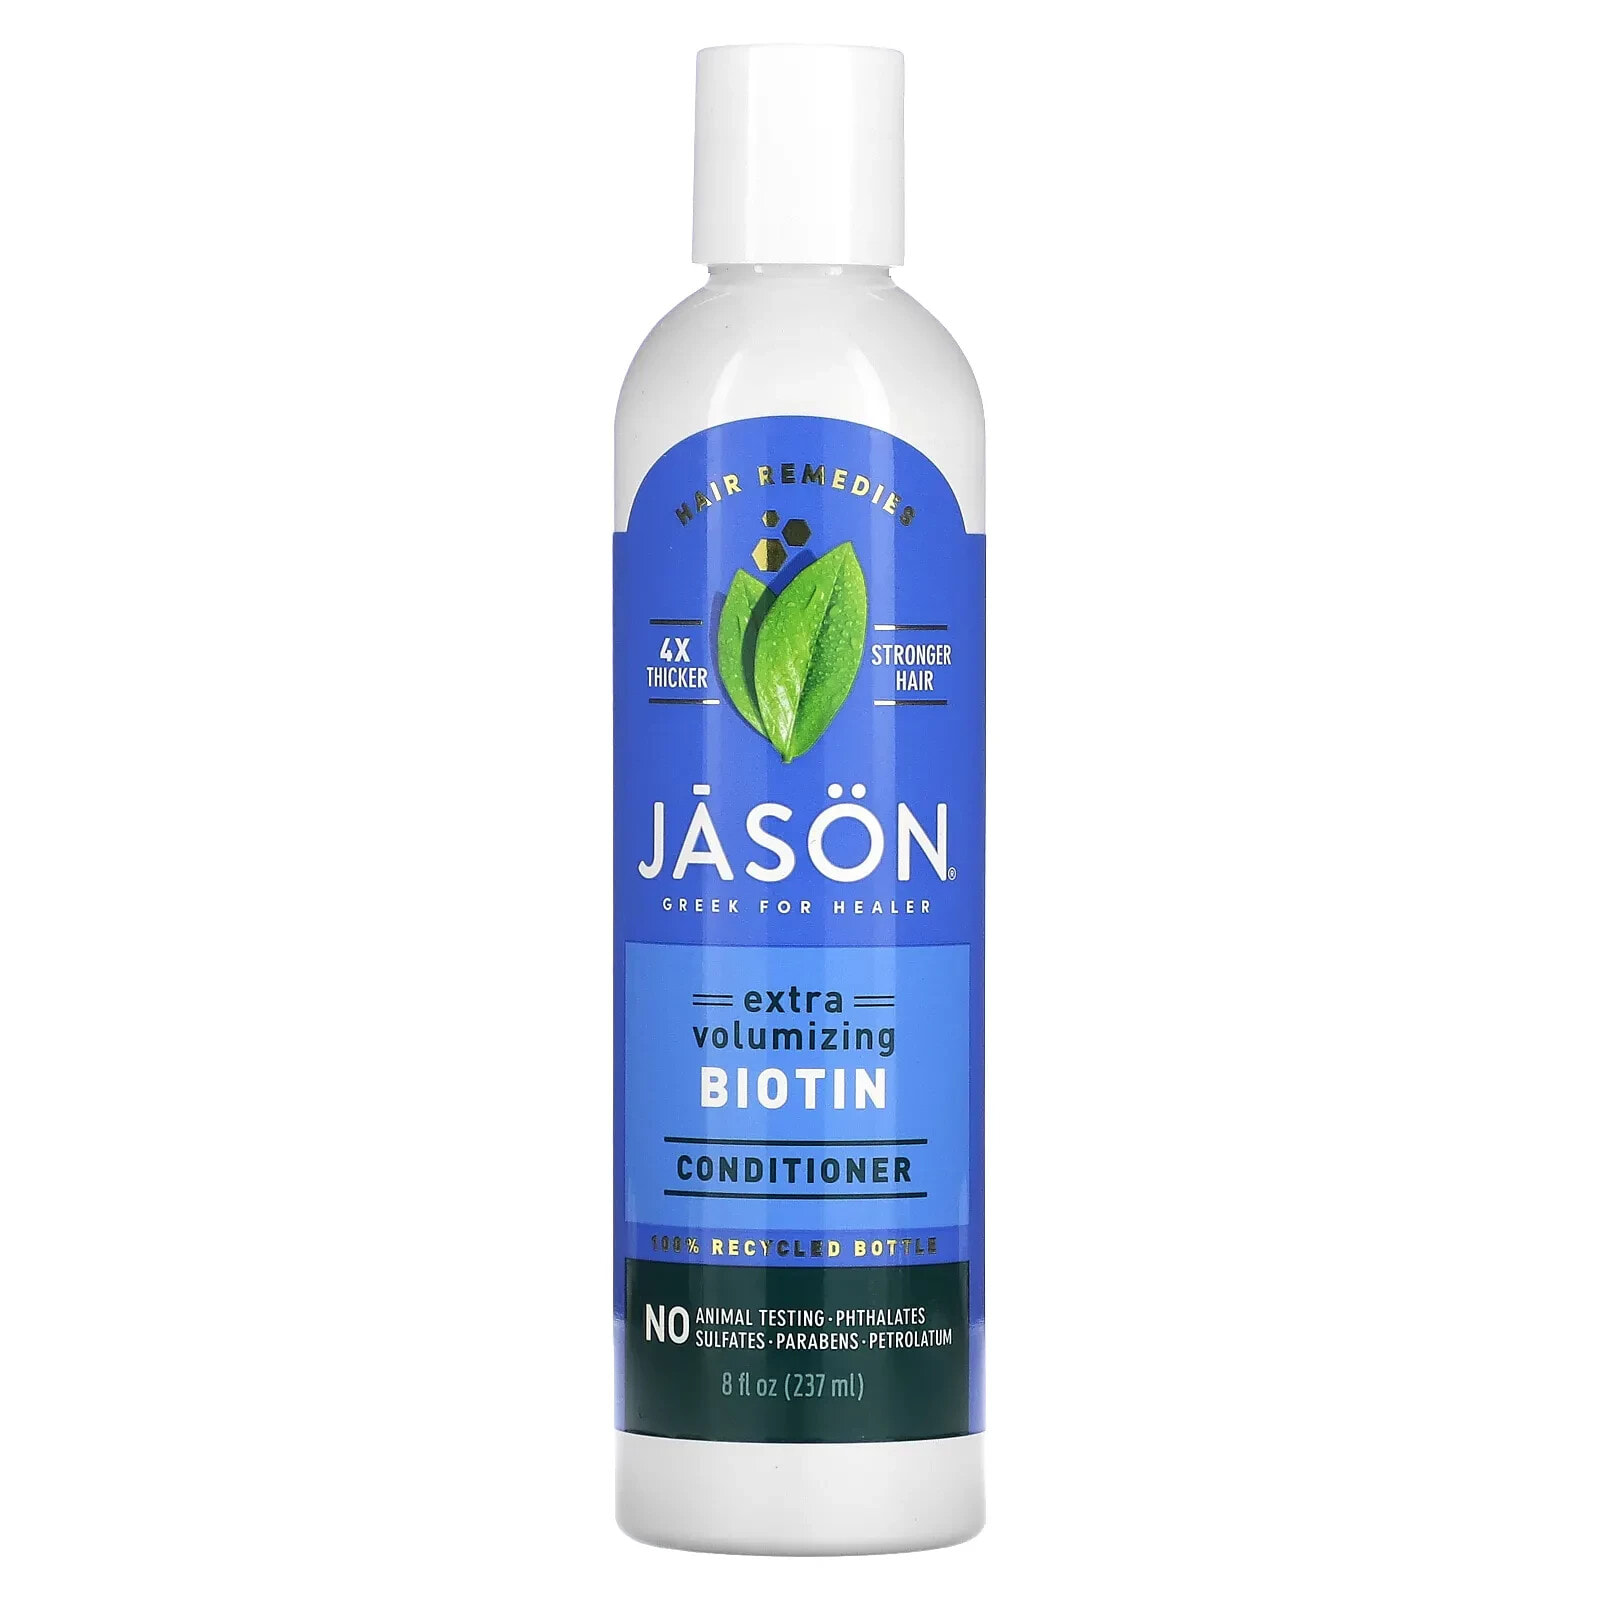 Jason Natural Extra Volumizing Biotin Conditioner Кондиционер с биотином, придающий объем волосам 237 мл